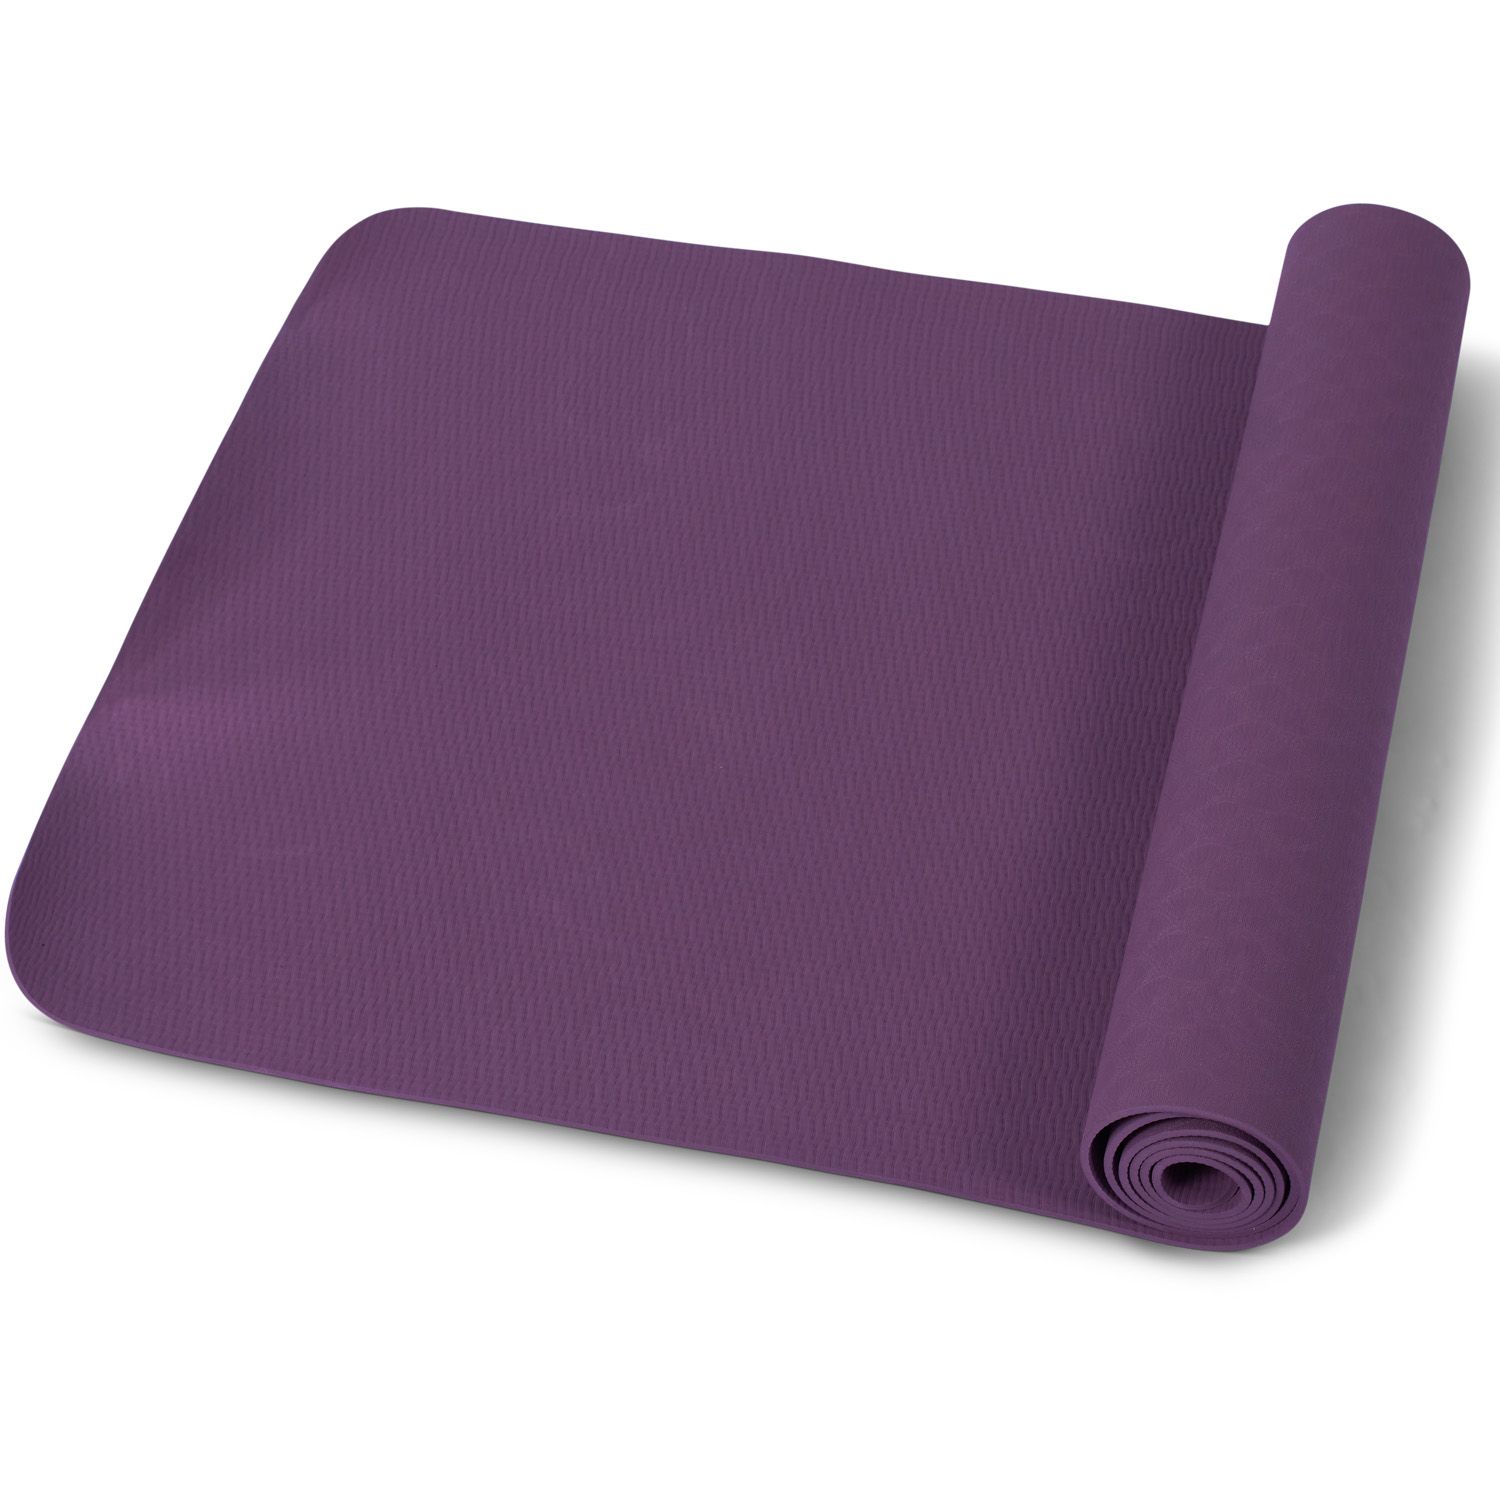 gladiator sports yoga mat purple rolled on floor